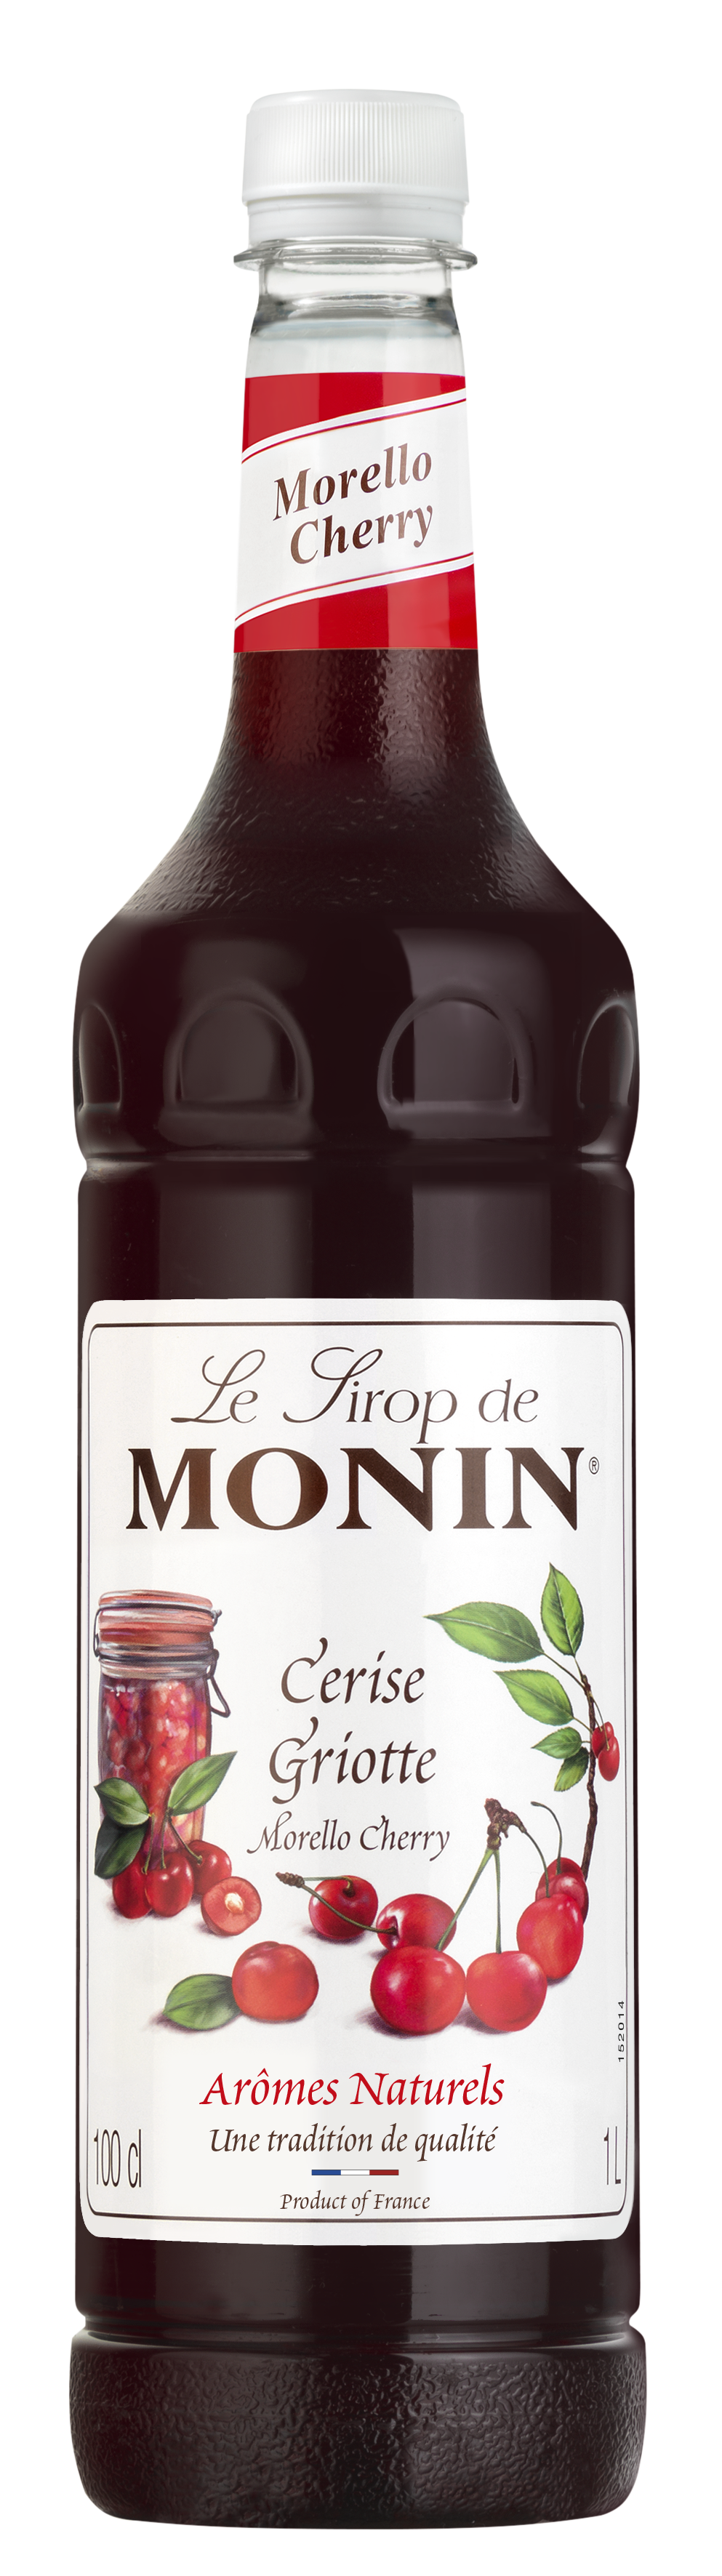 MONIN Morello Cherry Syrup 1L PET